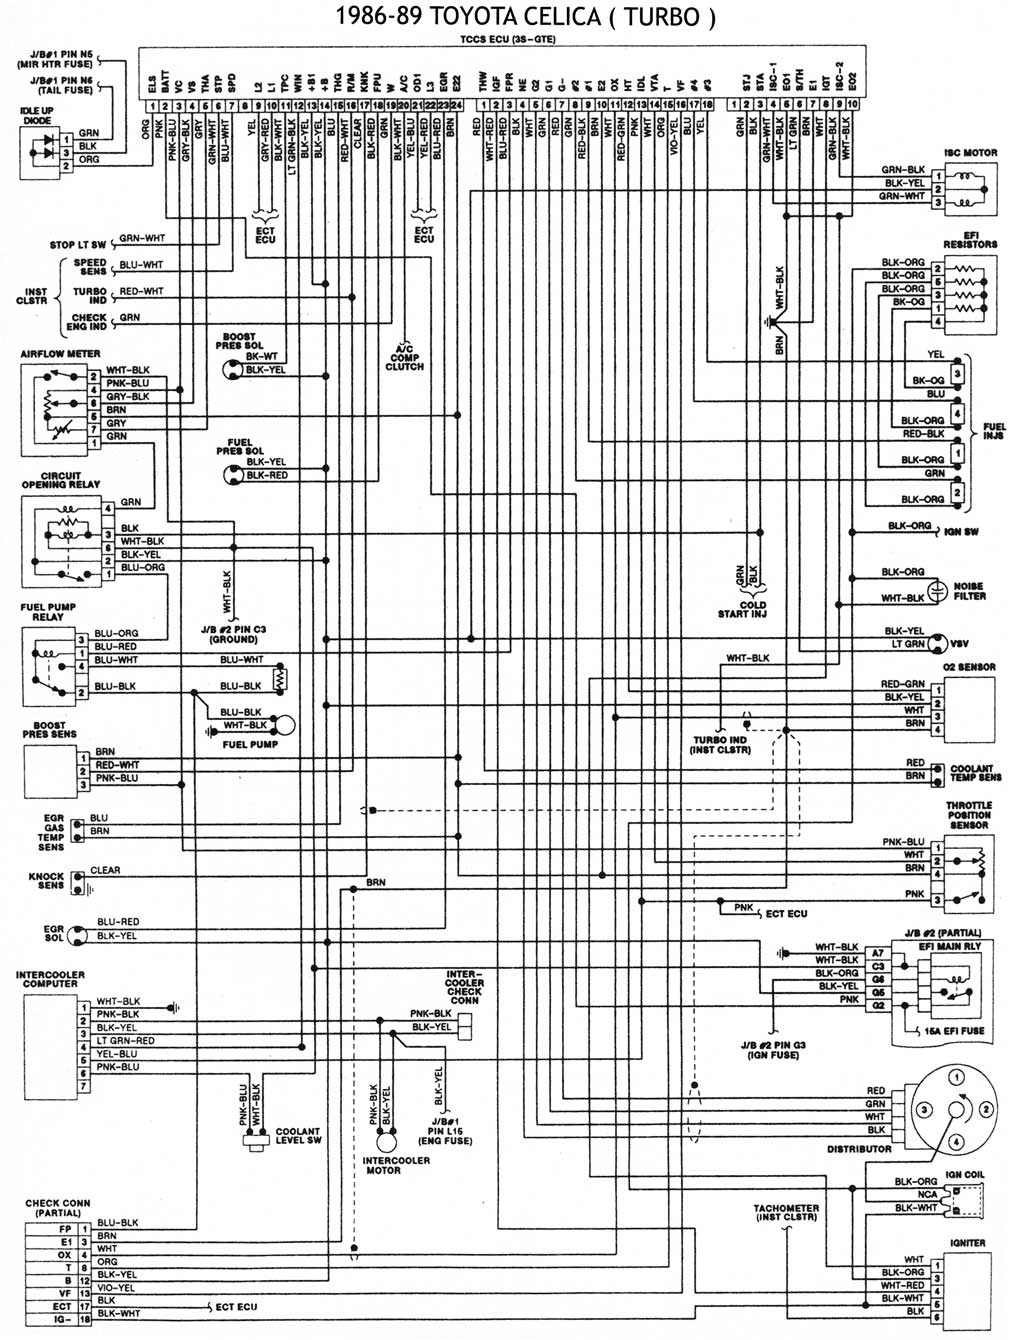 TOYOTA 1986/93 | DIAGRAMAS ESQUEMAS | UBIC. DE COMP ... 1990 honda crx radio wiring diagram 